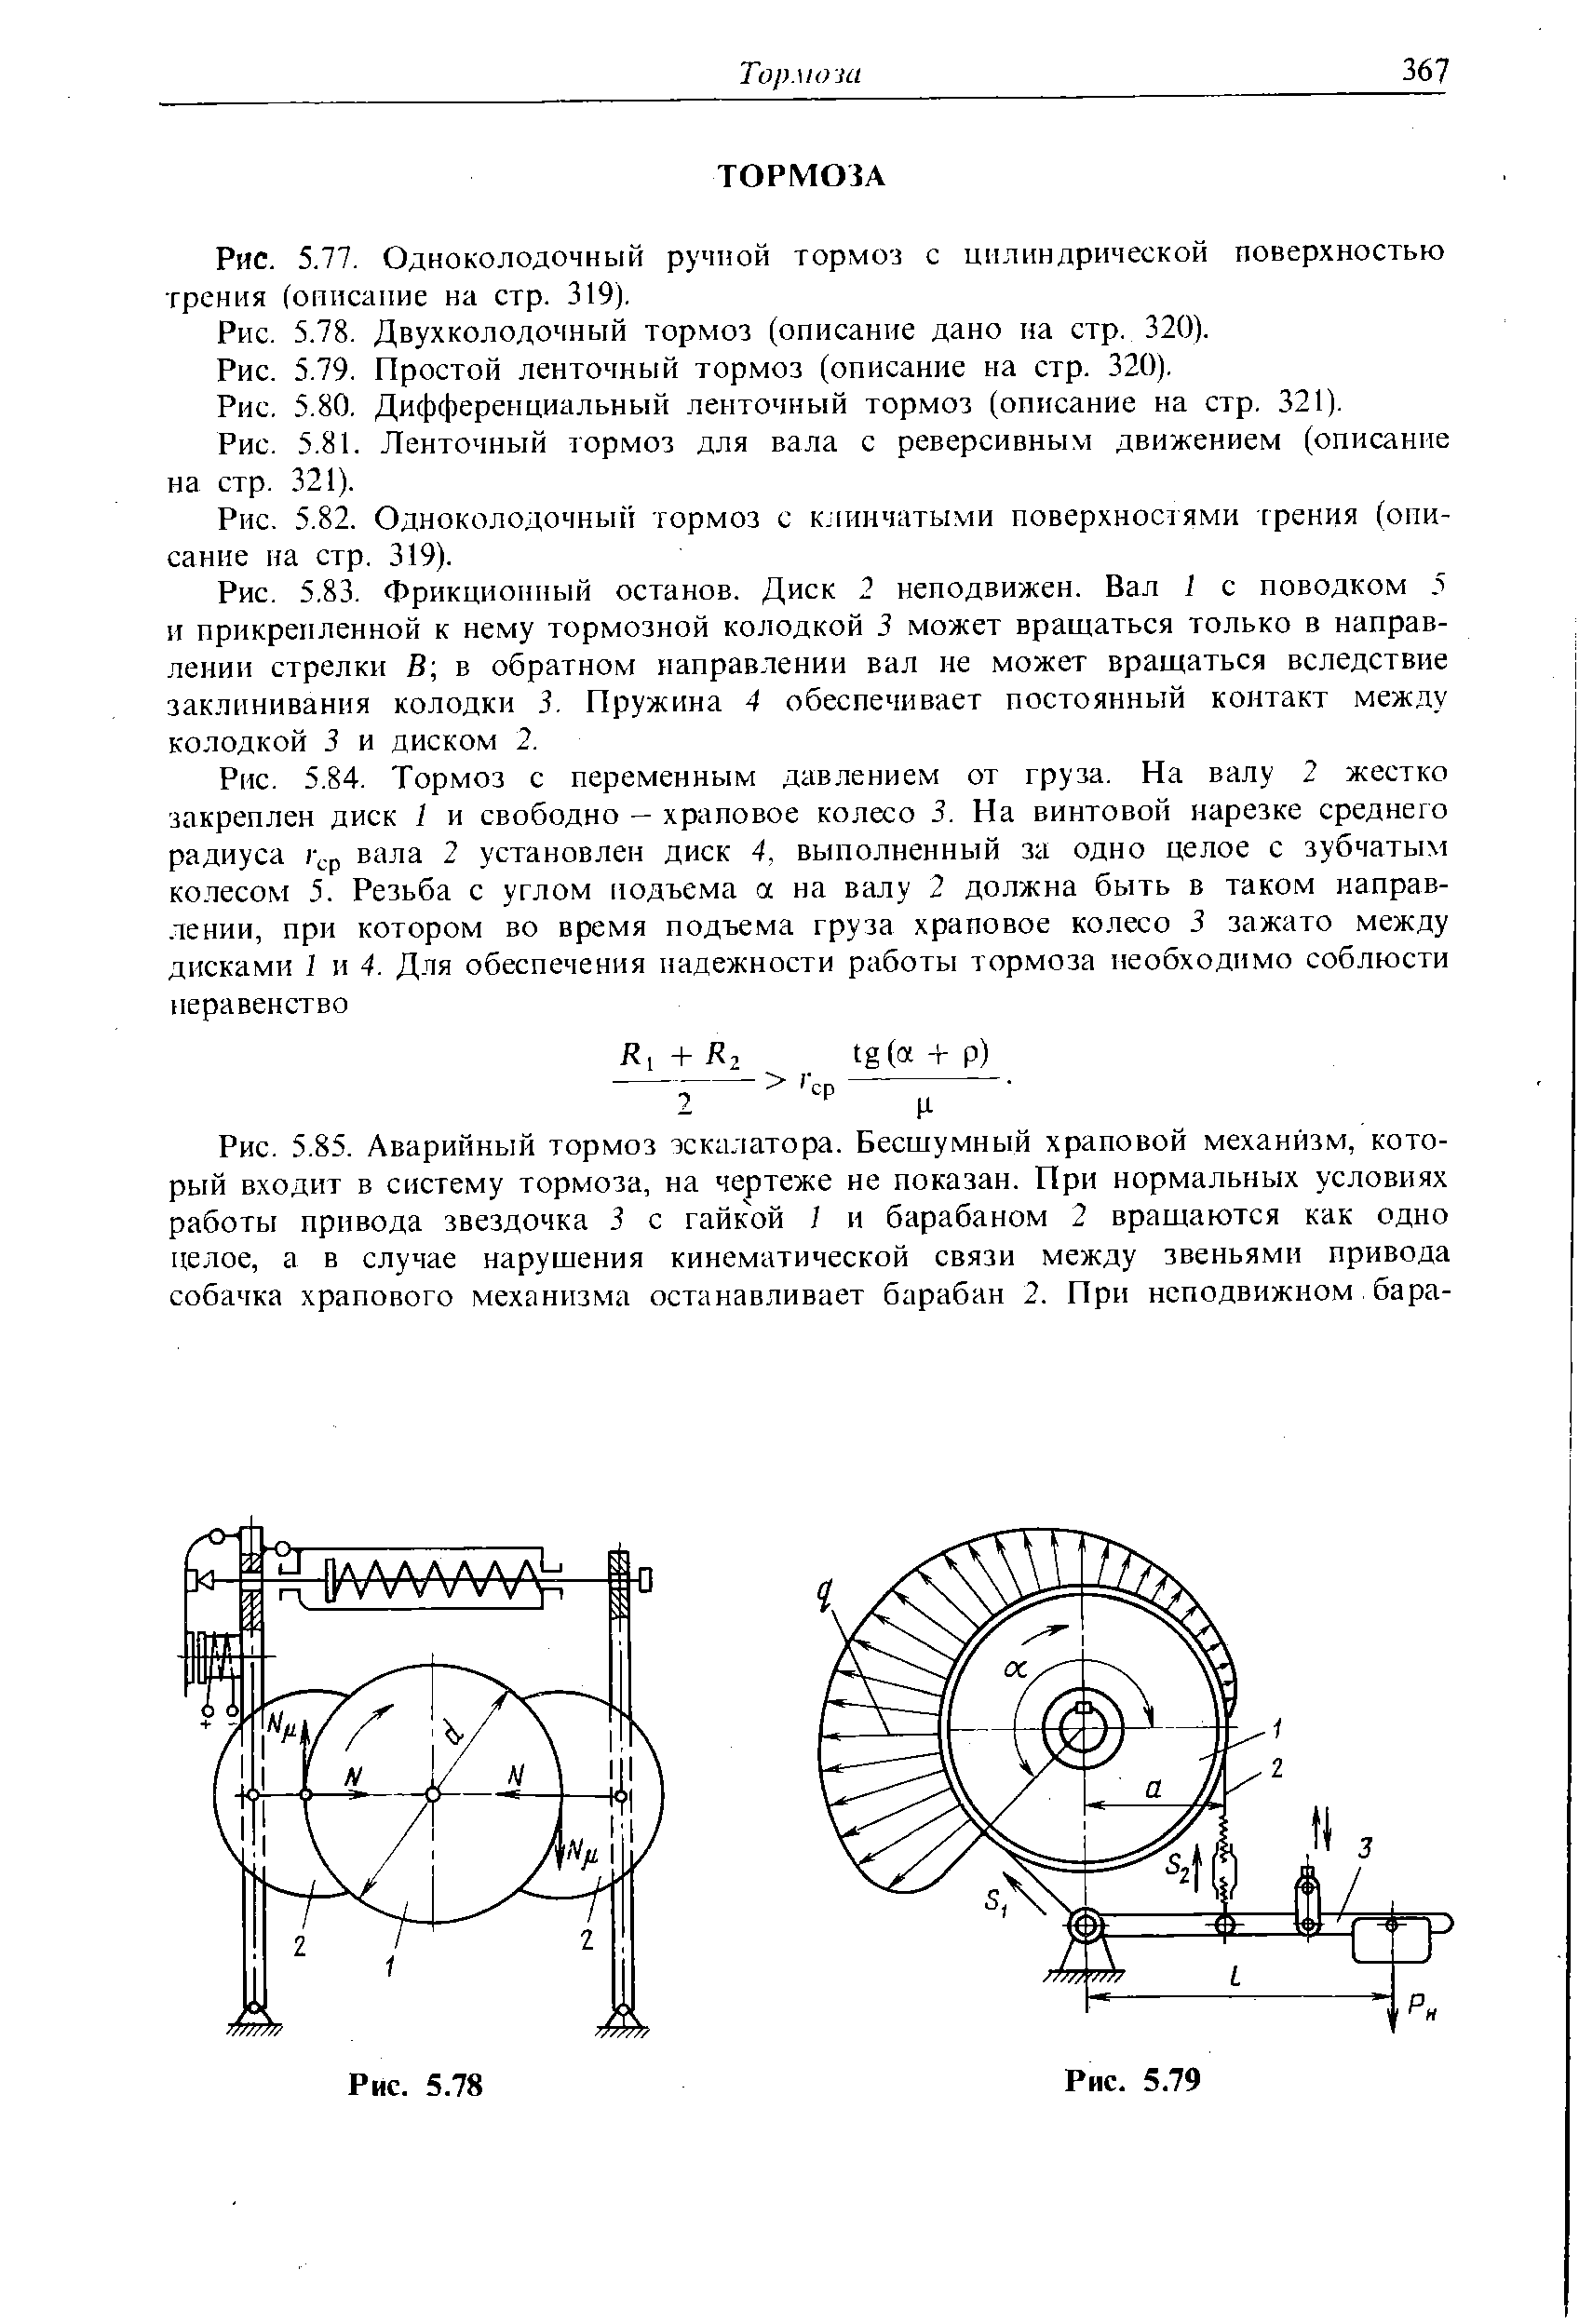 Рис. 5.78. Двухколодочный тормоз (описание дано на стр. 320).
